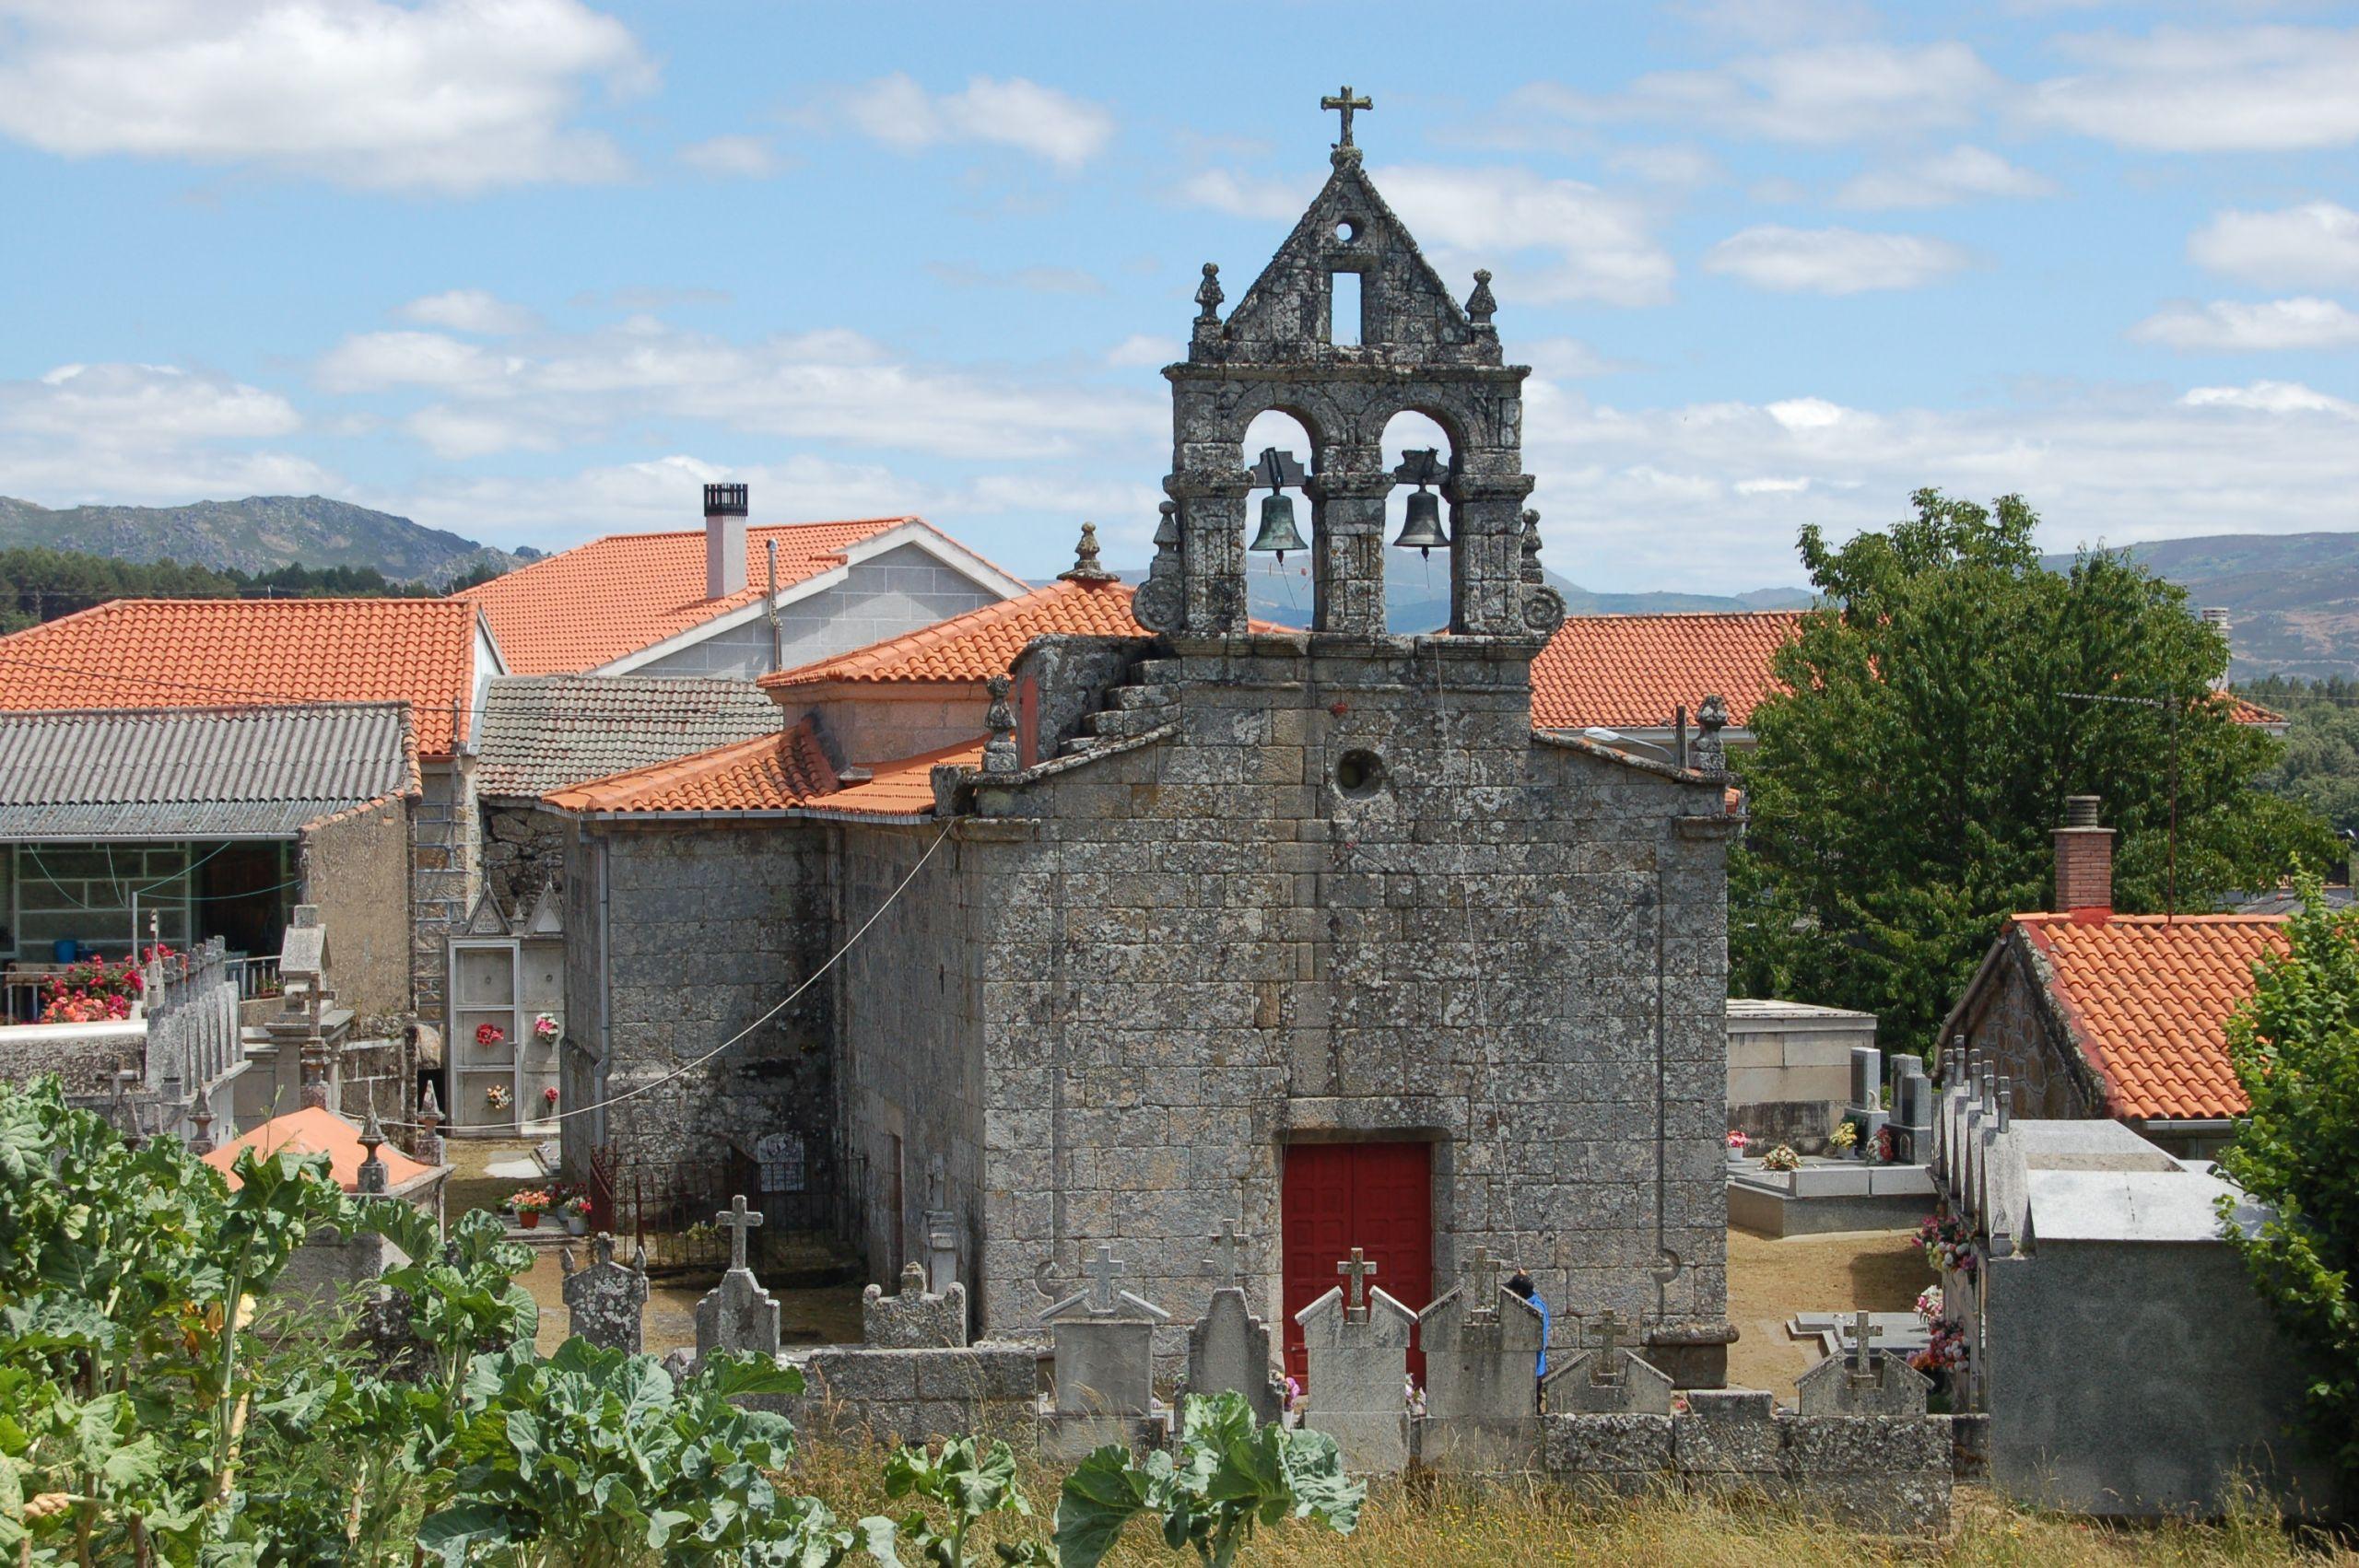  Iglesia de Maus de Salas (Fuente: @estevoaei vía Wikimedia)